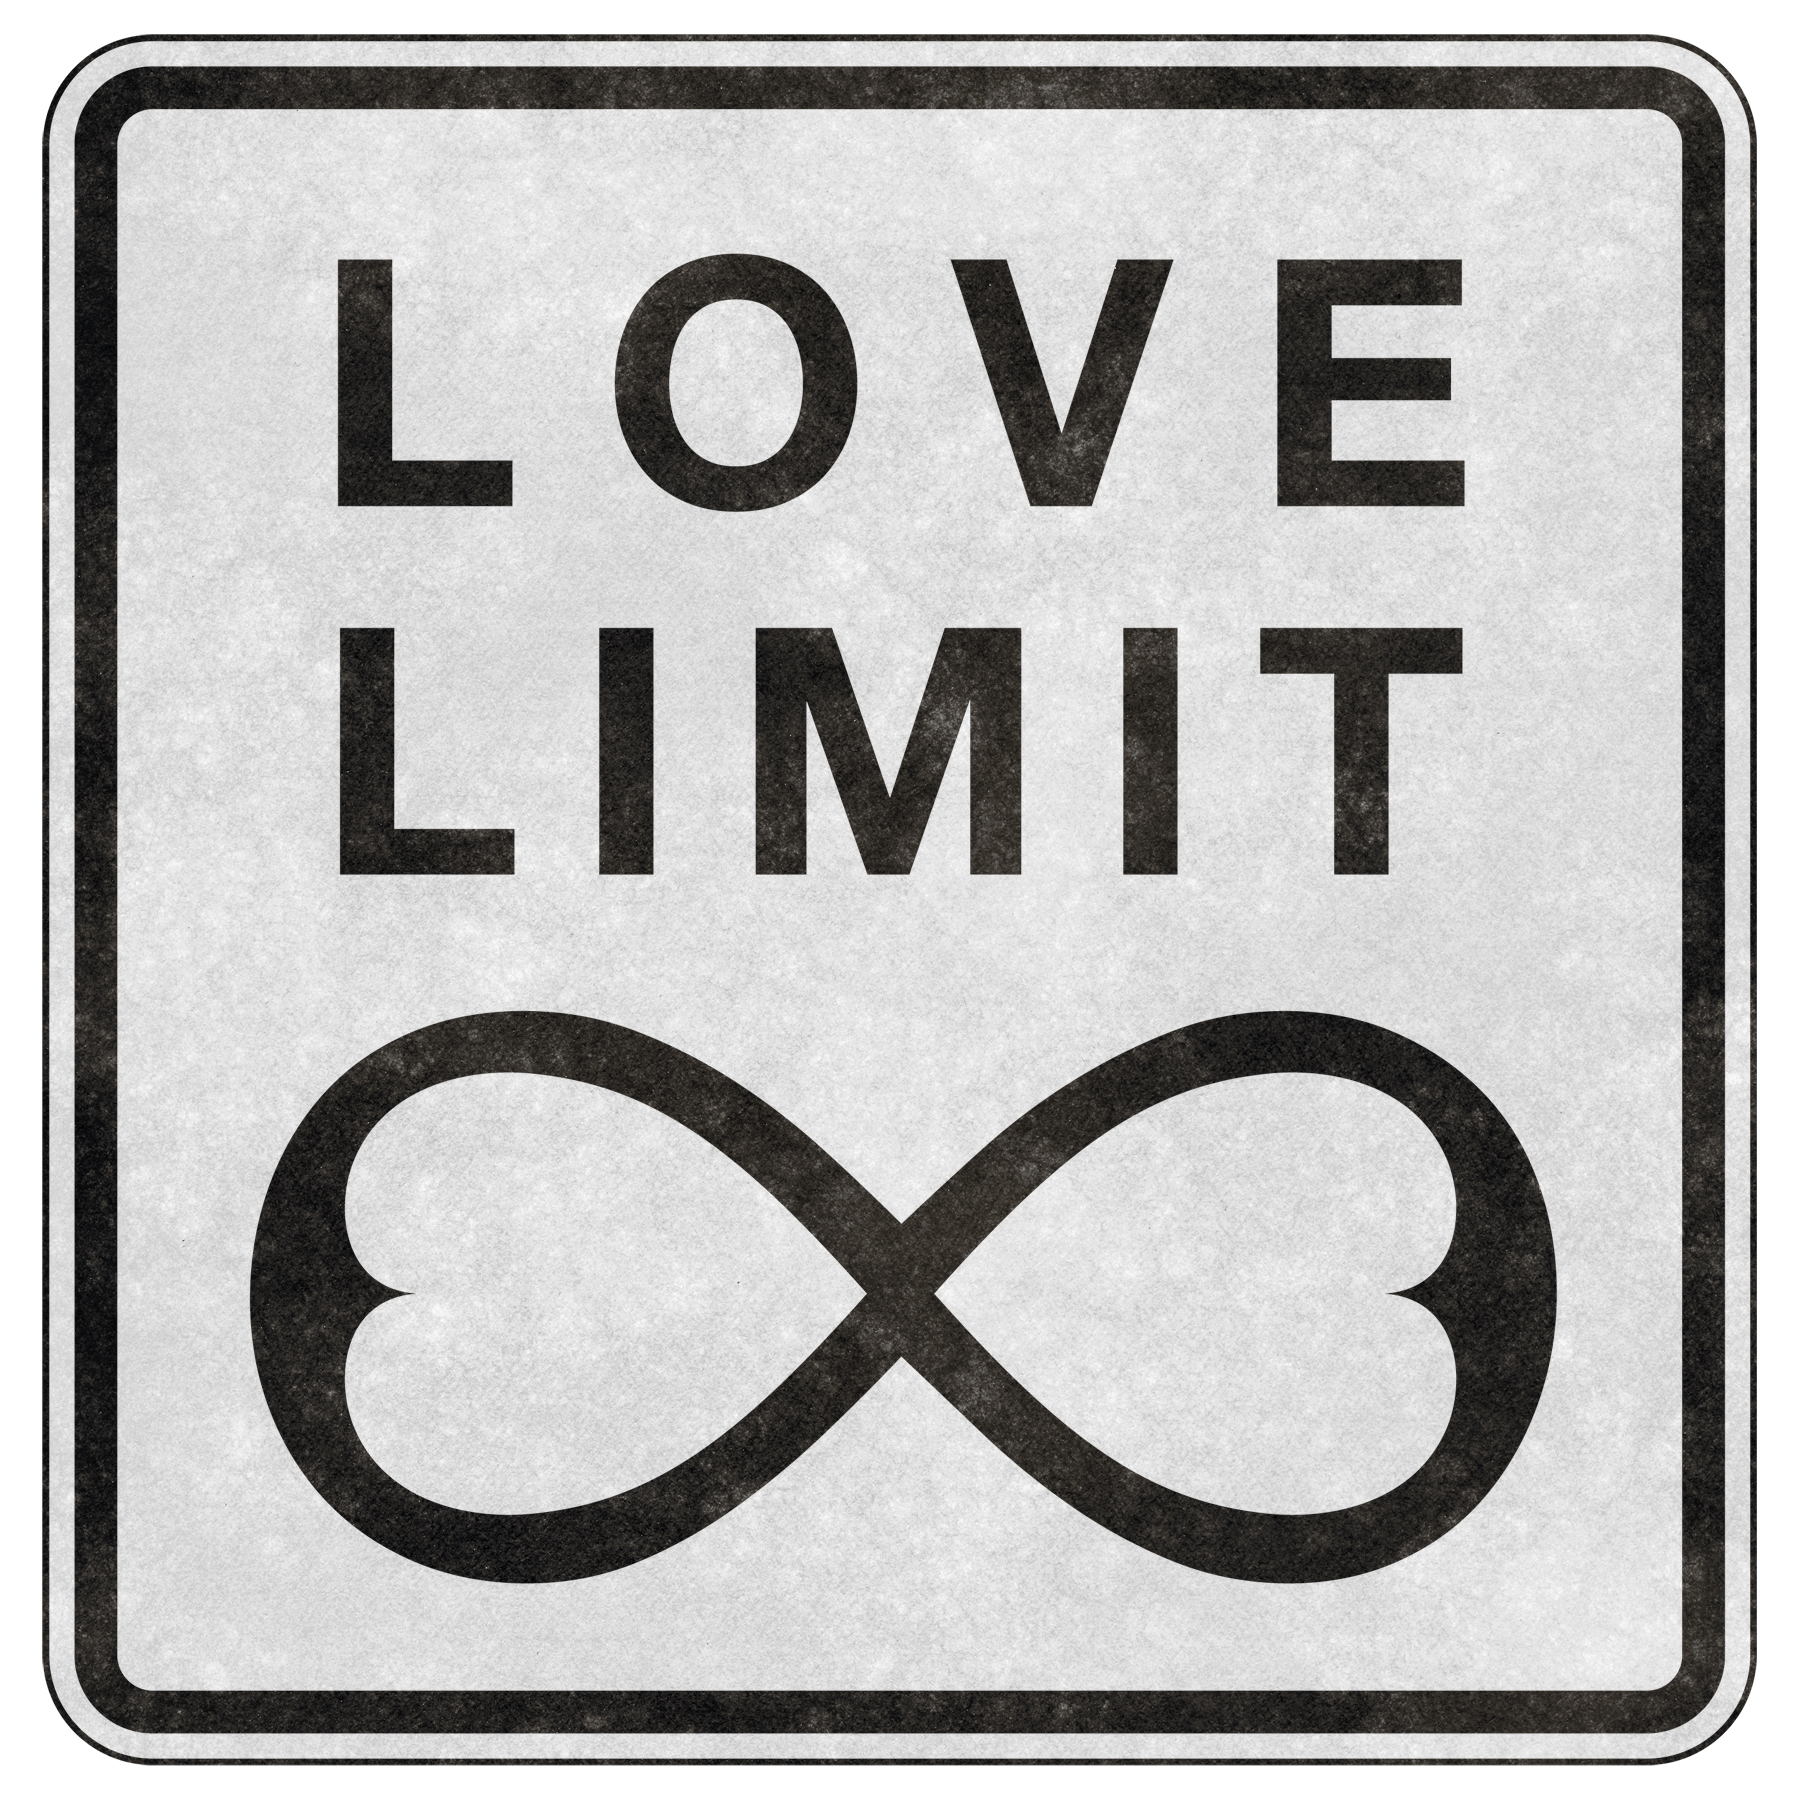 grunge_road_sign___infinite_love_limit_by_somadjinn-d620fbl.jpg